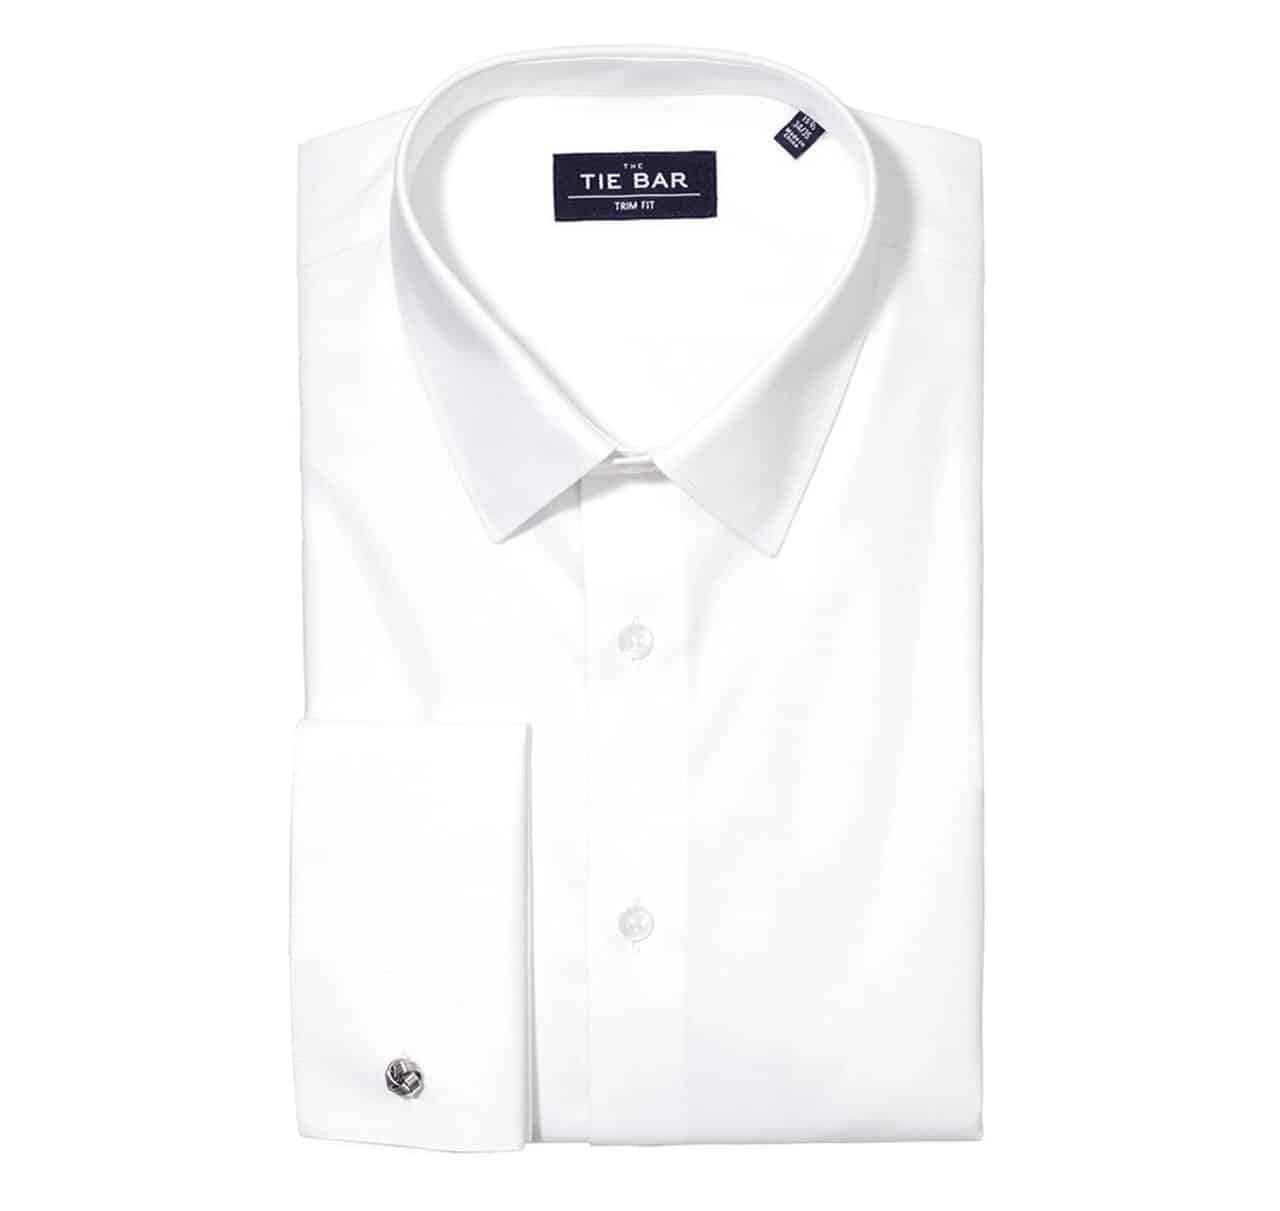 White Dress T-Shirt: High School graduation gifts for him
